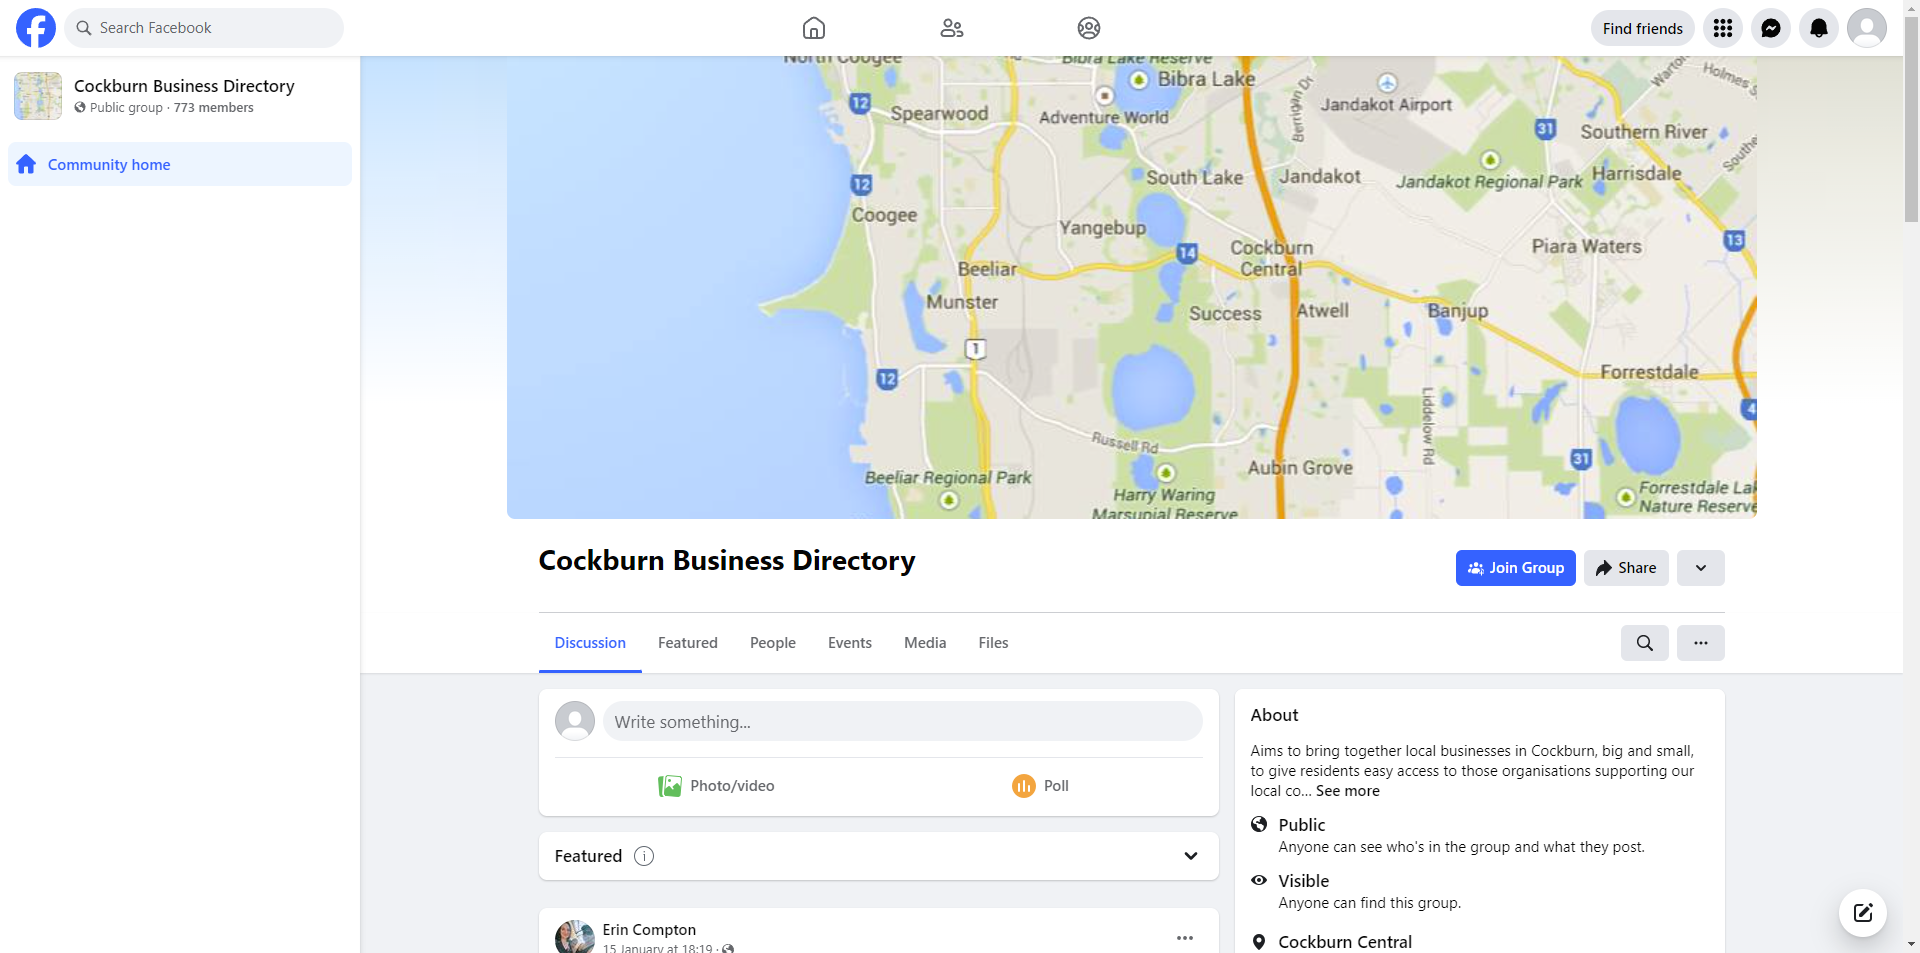 Cockburn Business Directory